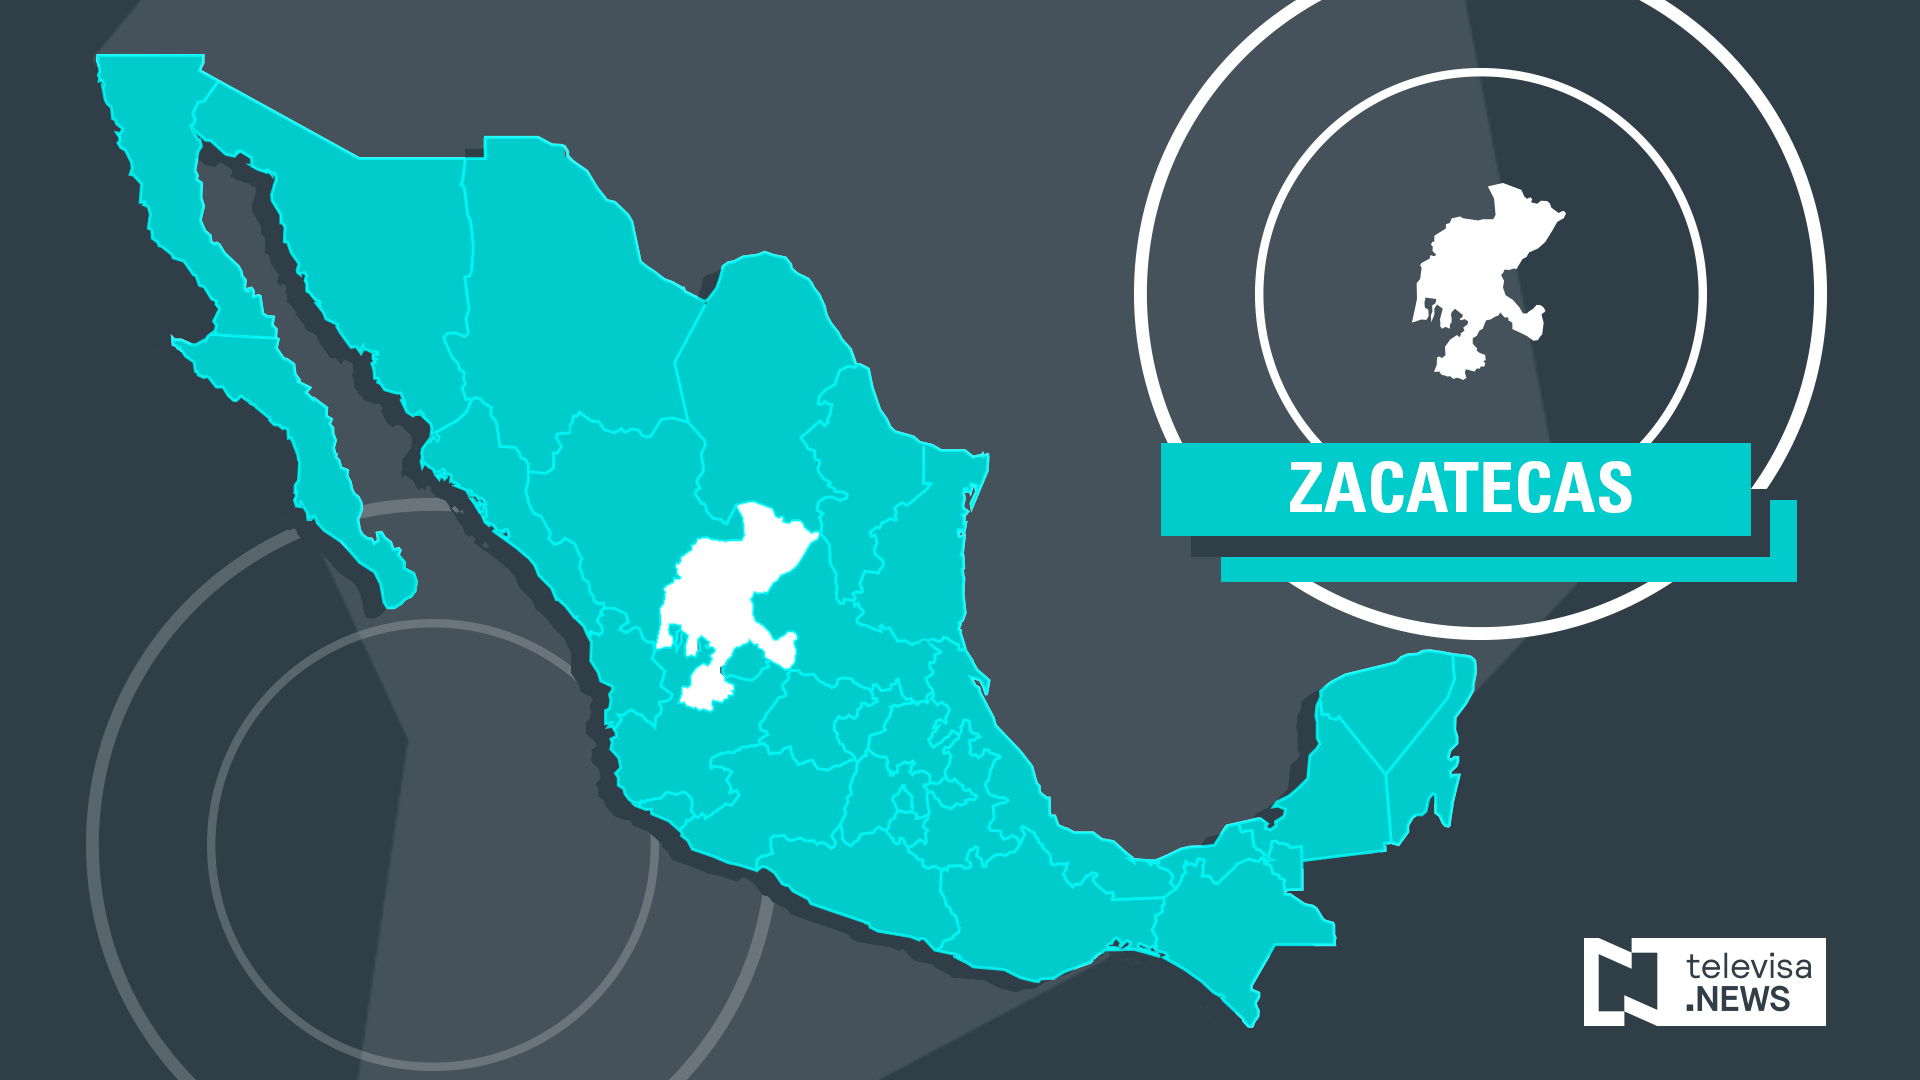 Asesinan a tres personas en un hotel en Zacatecas